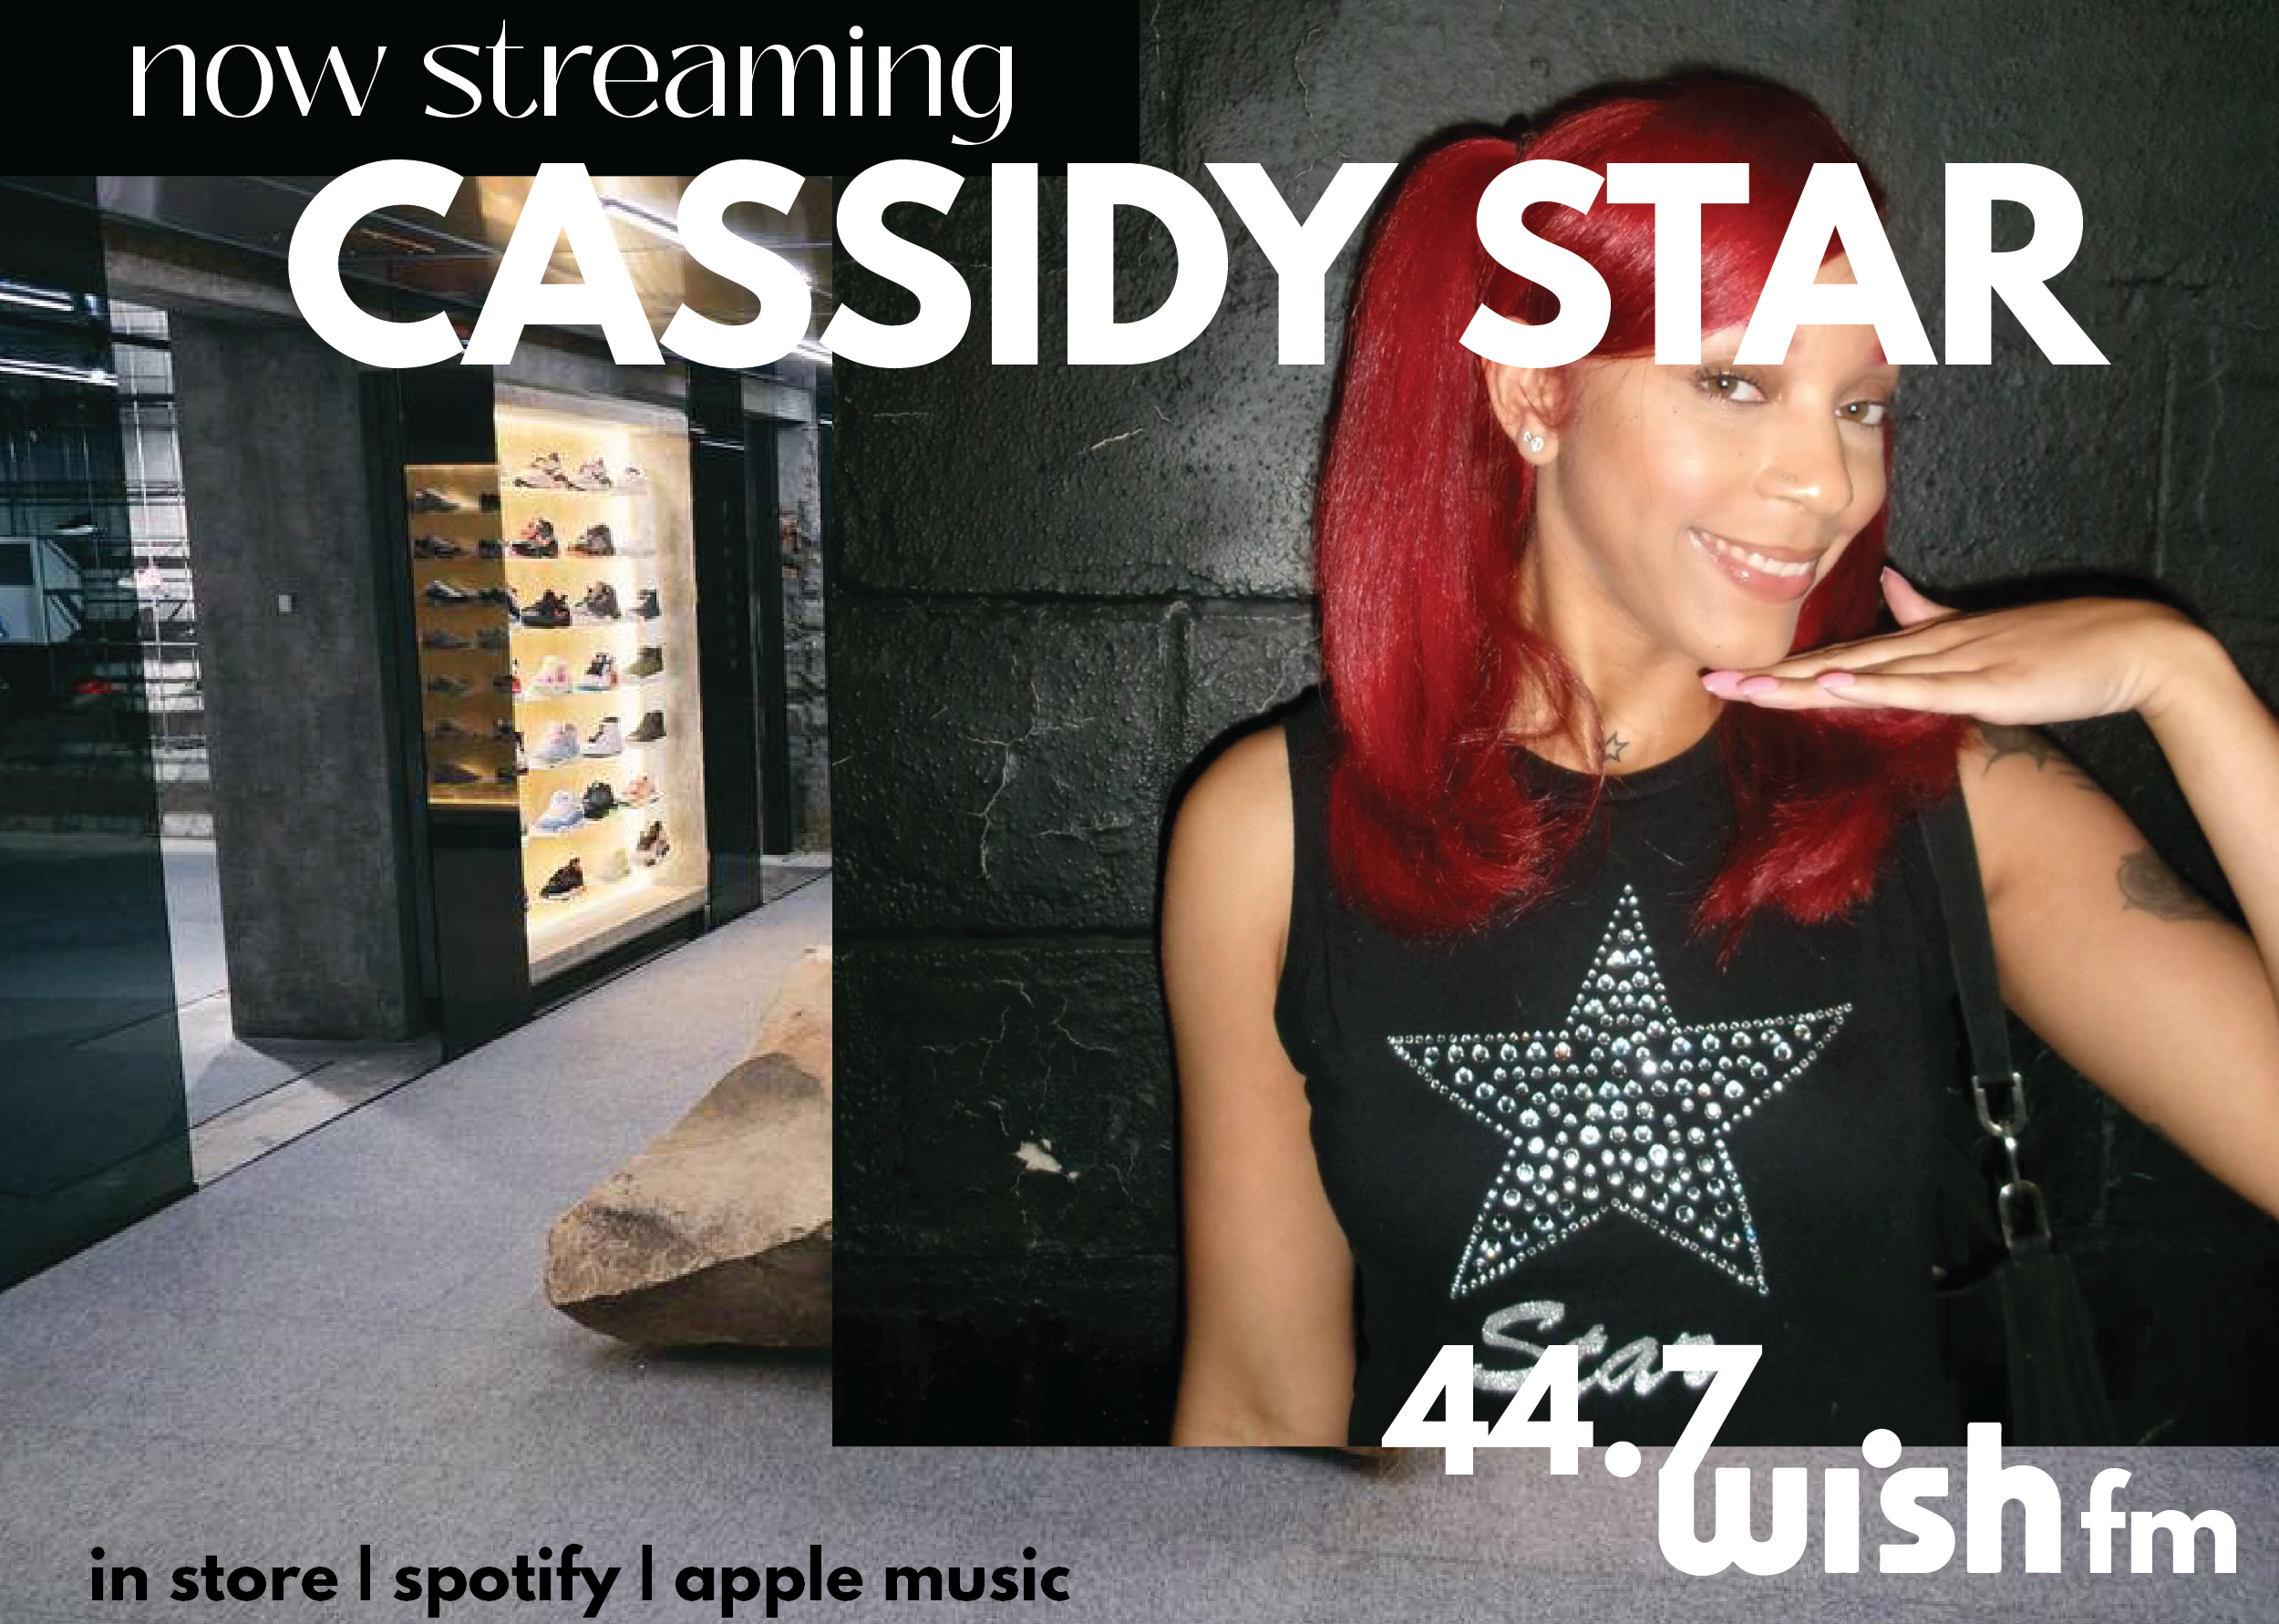 44.7 Wish FM: Cassidy Star